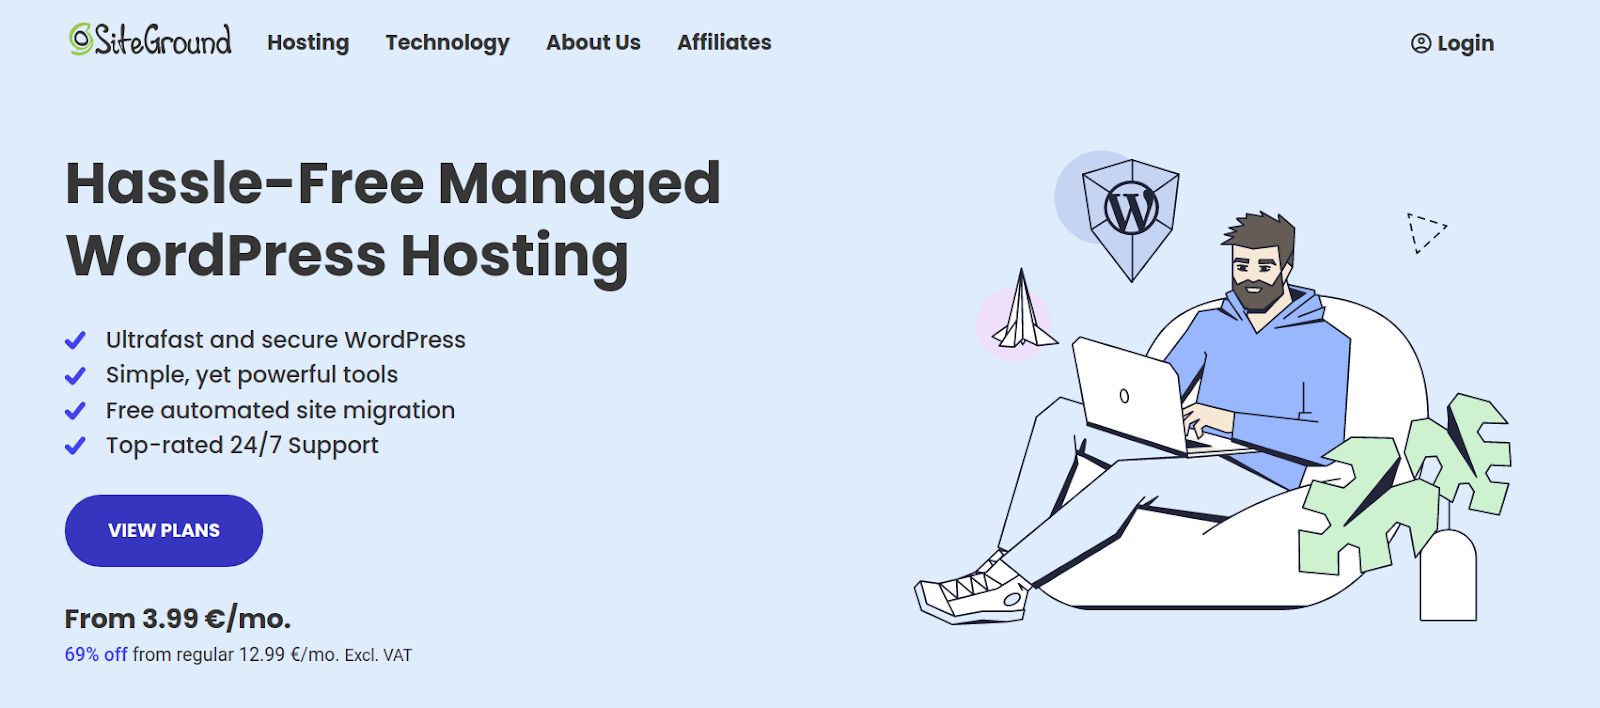 SiteGround managed WordPress hosting plans